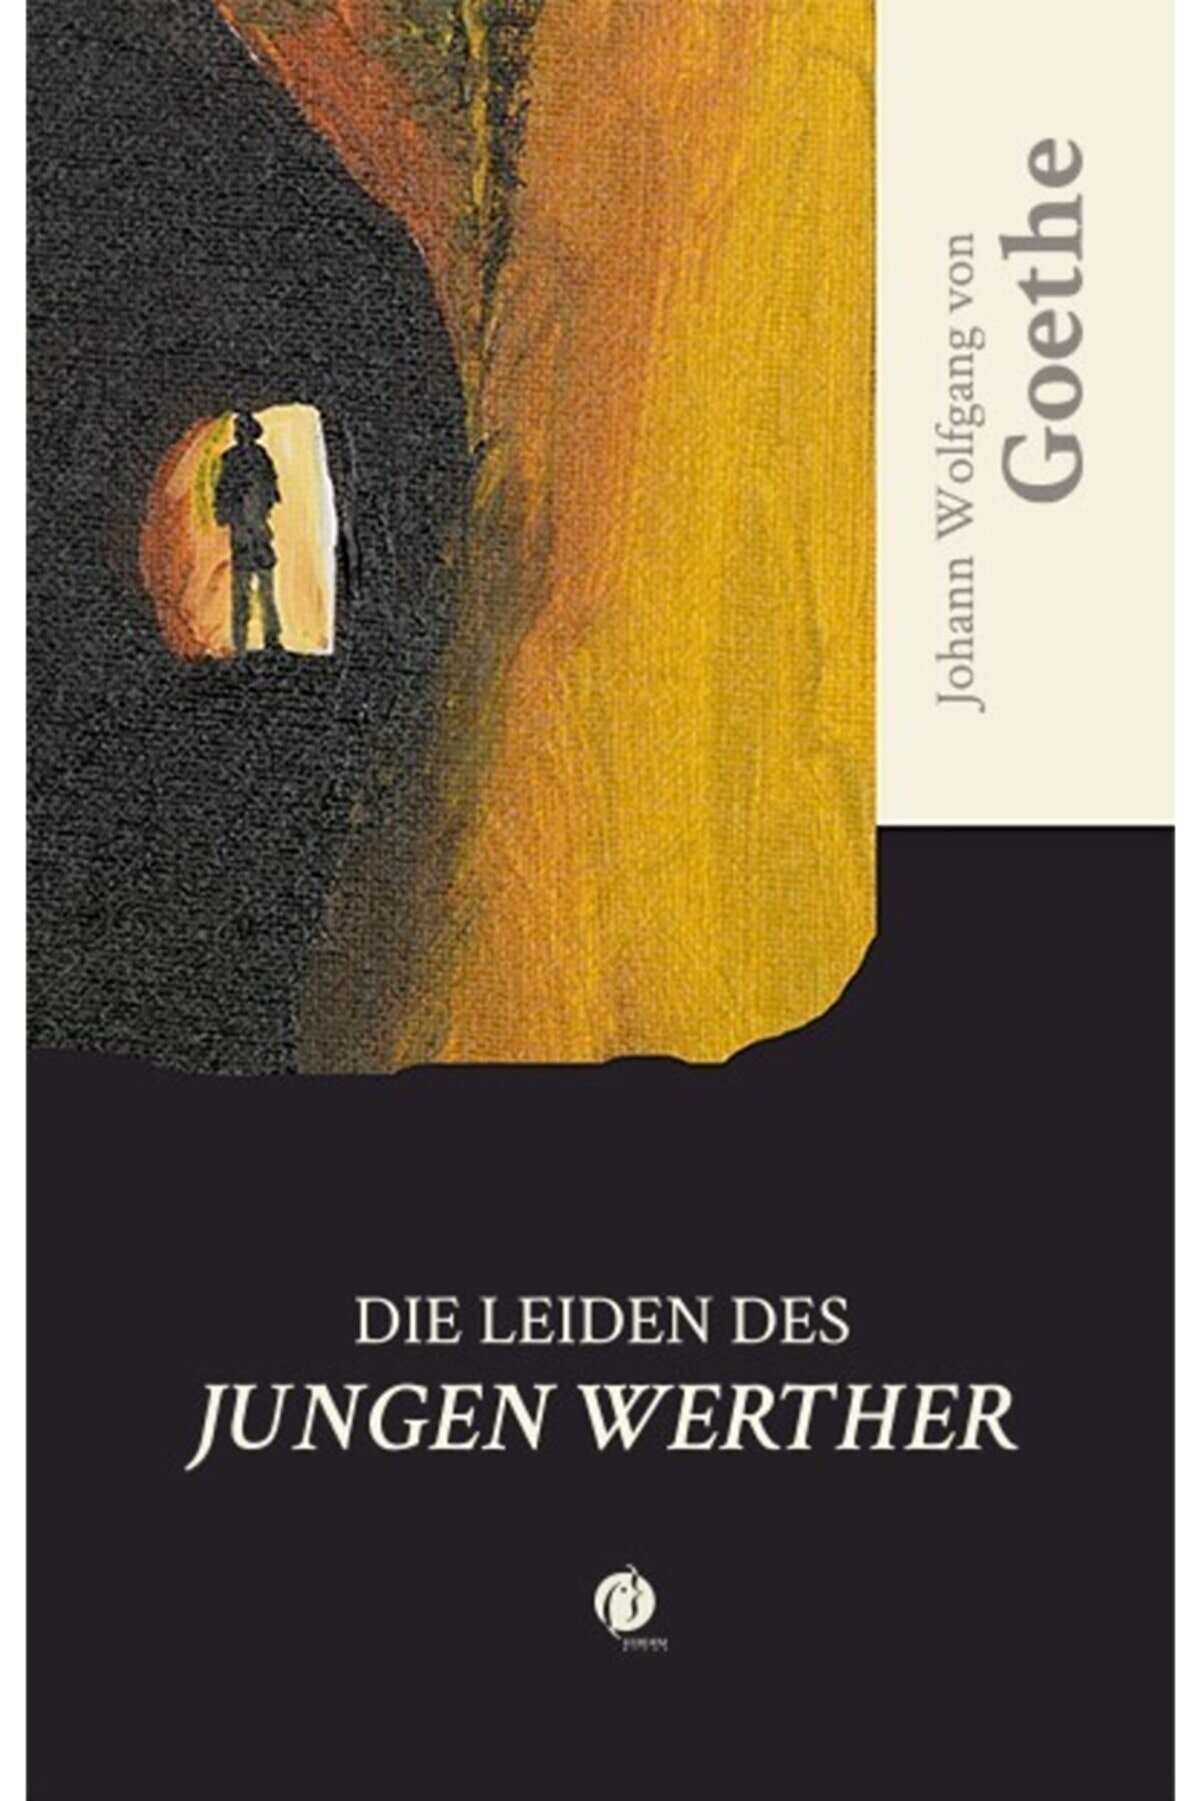 Herdem Kitap Dıe Leıden Des Jungen Werther - Goethe (almanca)